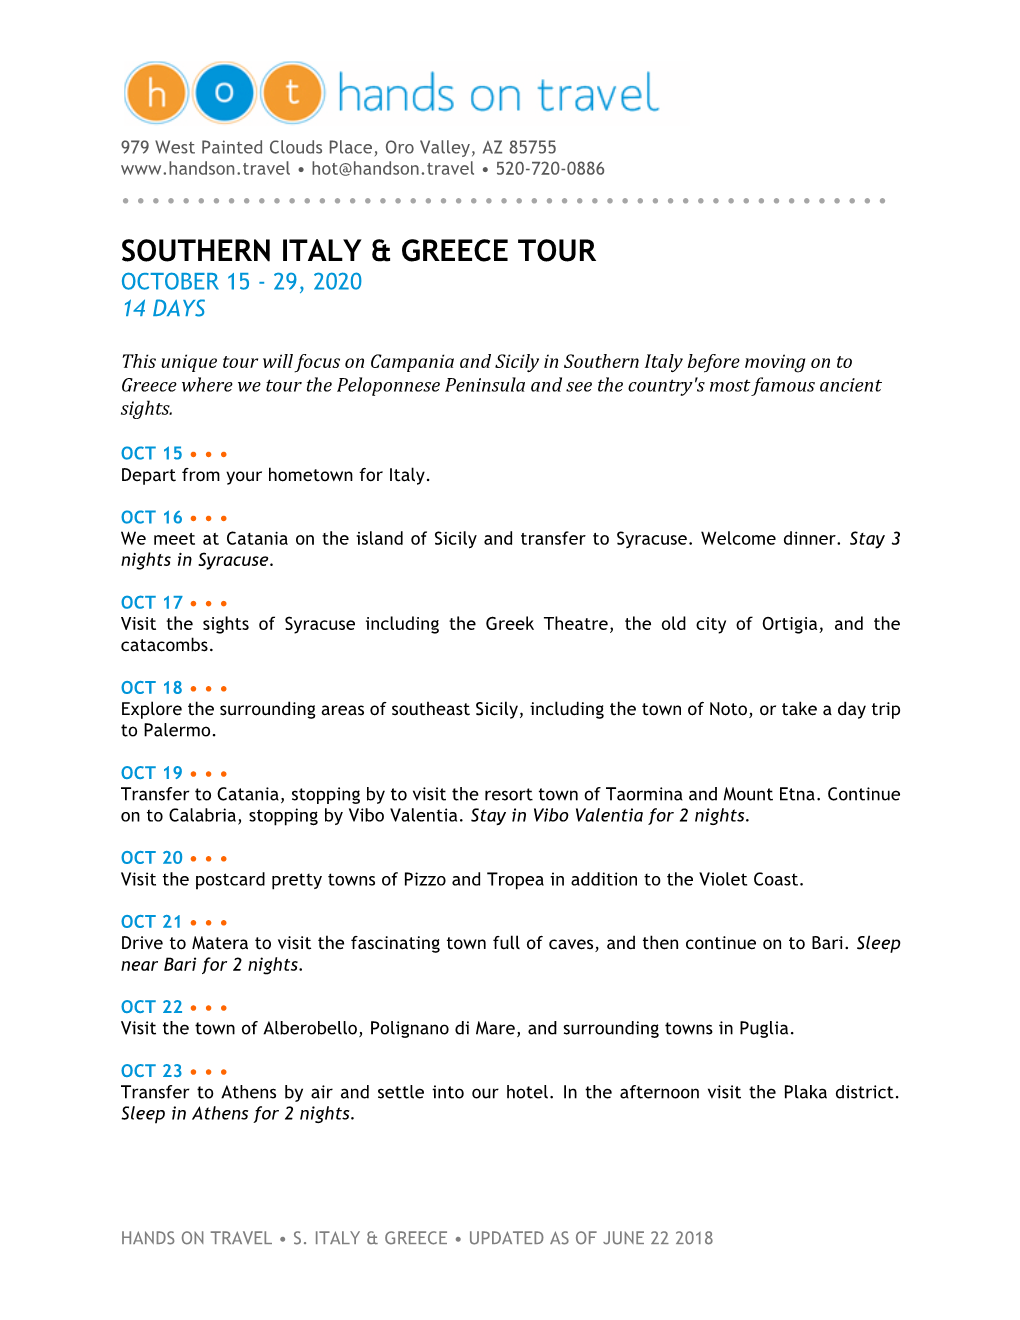 Southern Italy & Greece Tour